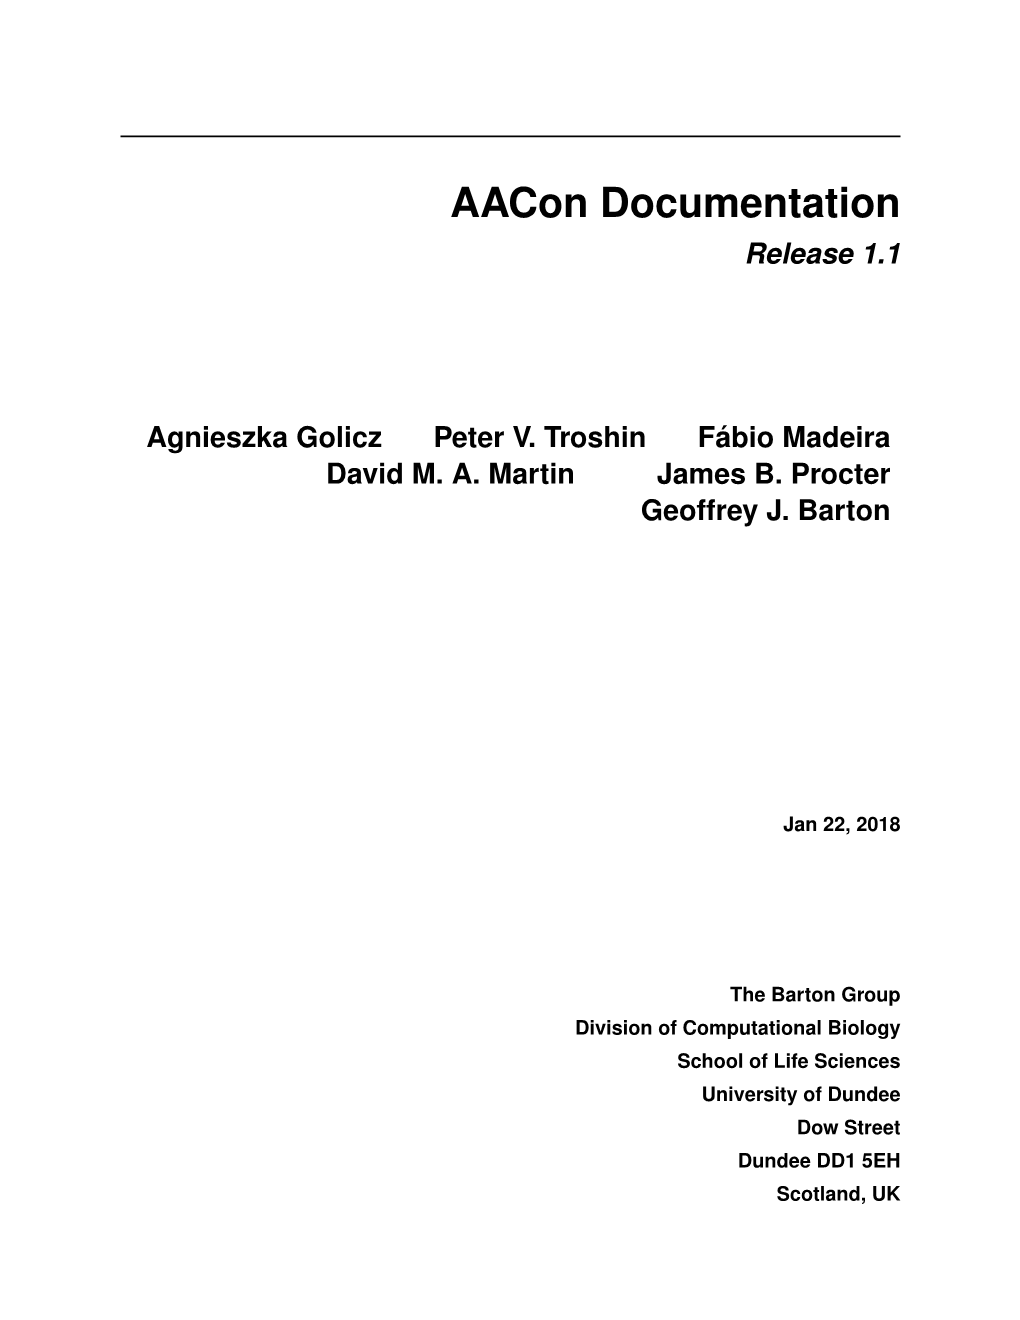 Aacon Documentation Release 1.1